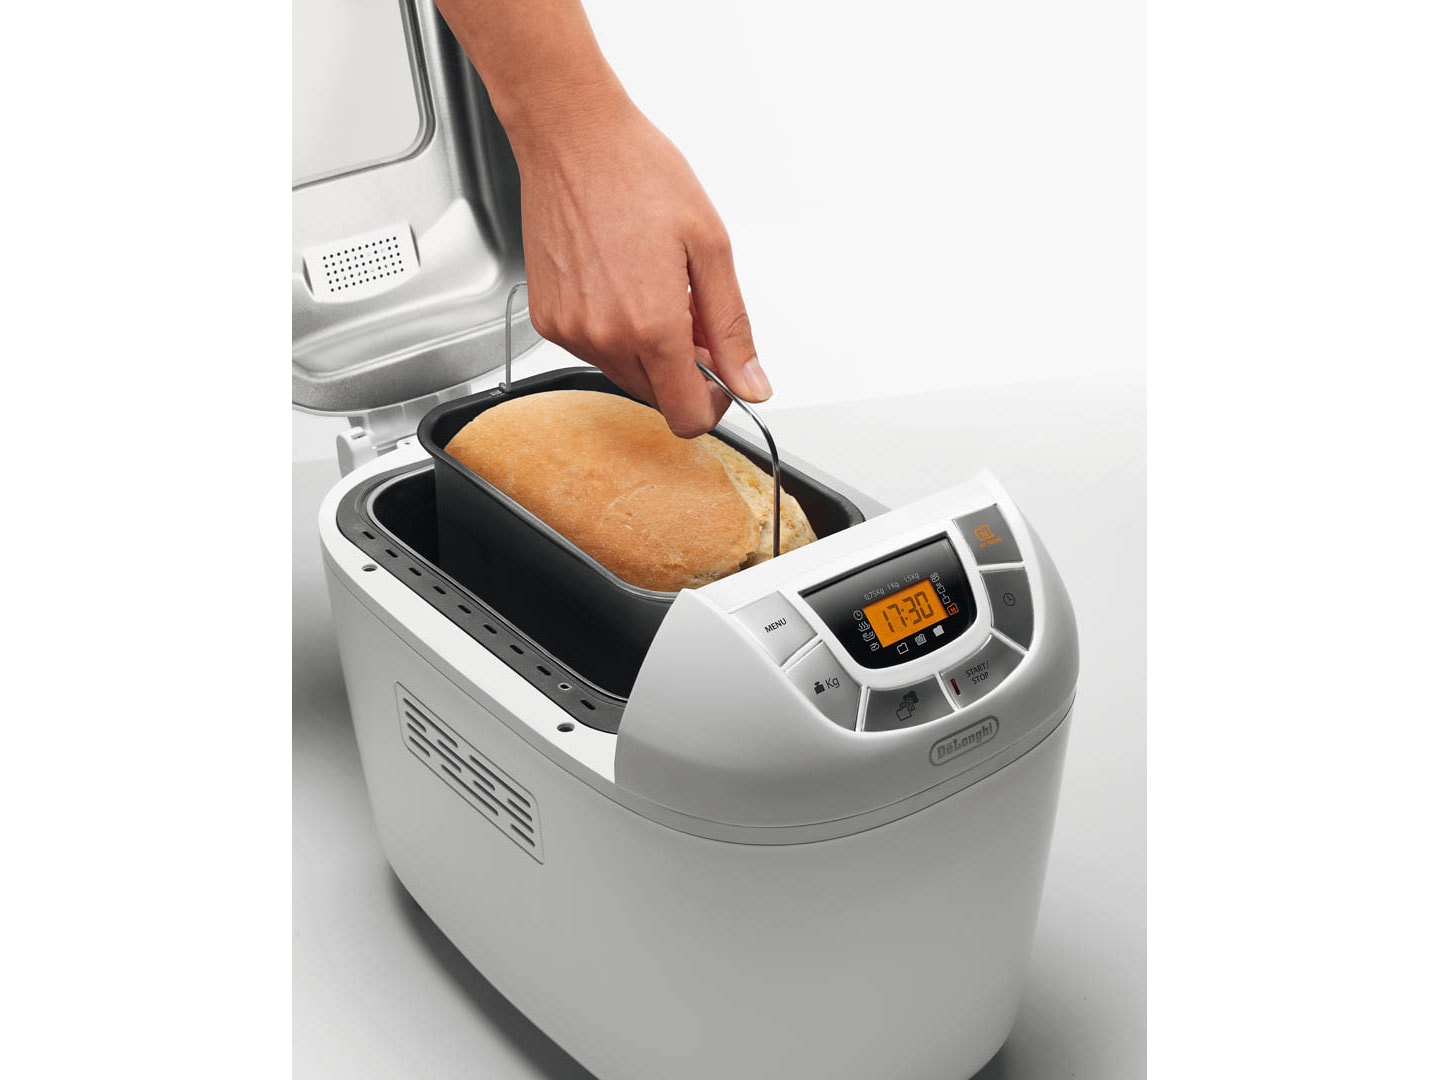 Хлебопечка Daewoo Electronics DBM-202. Мультиварка Bread maker MBS 2175. Taringtoun haus хлебопечка. Хлібопічка Heinner HBM-915wh. Хлебопечка филипс рецепты